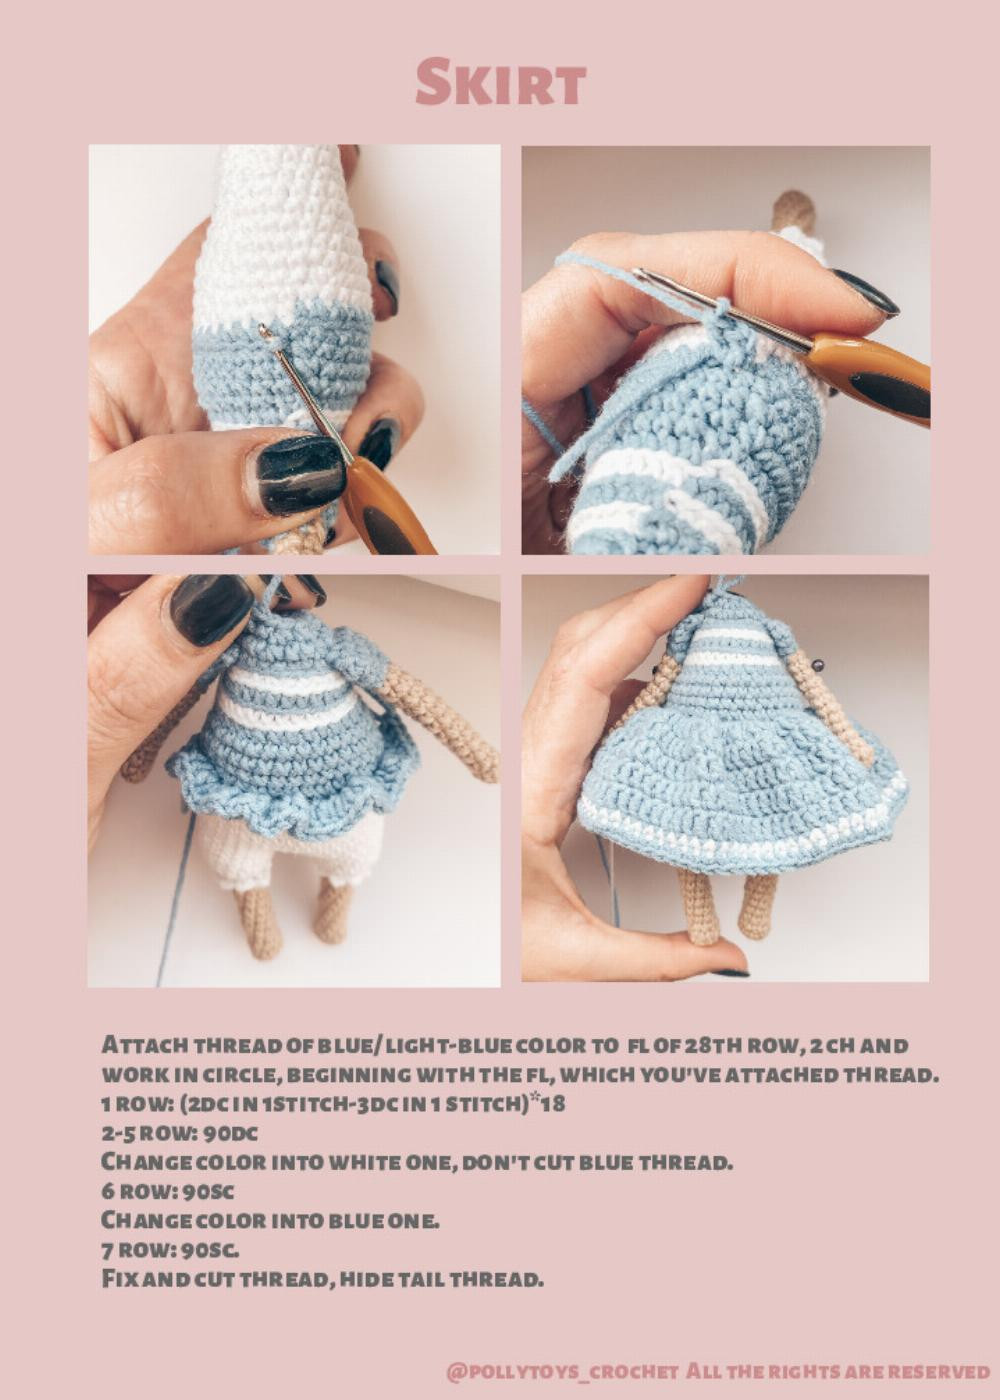 pattern crochet the sailor girl betty